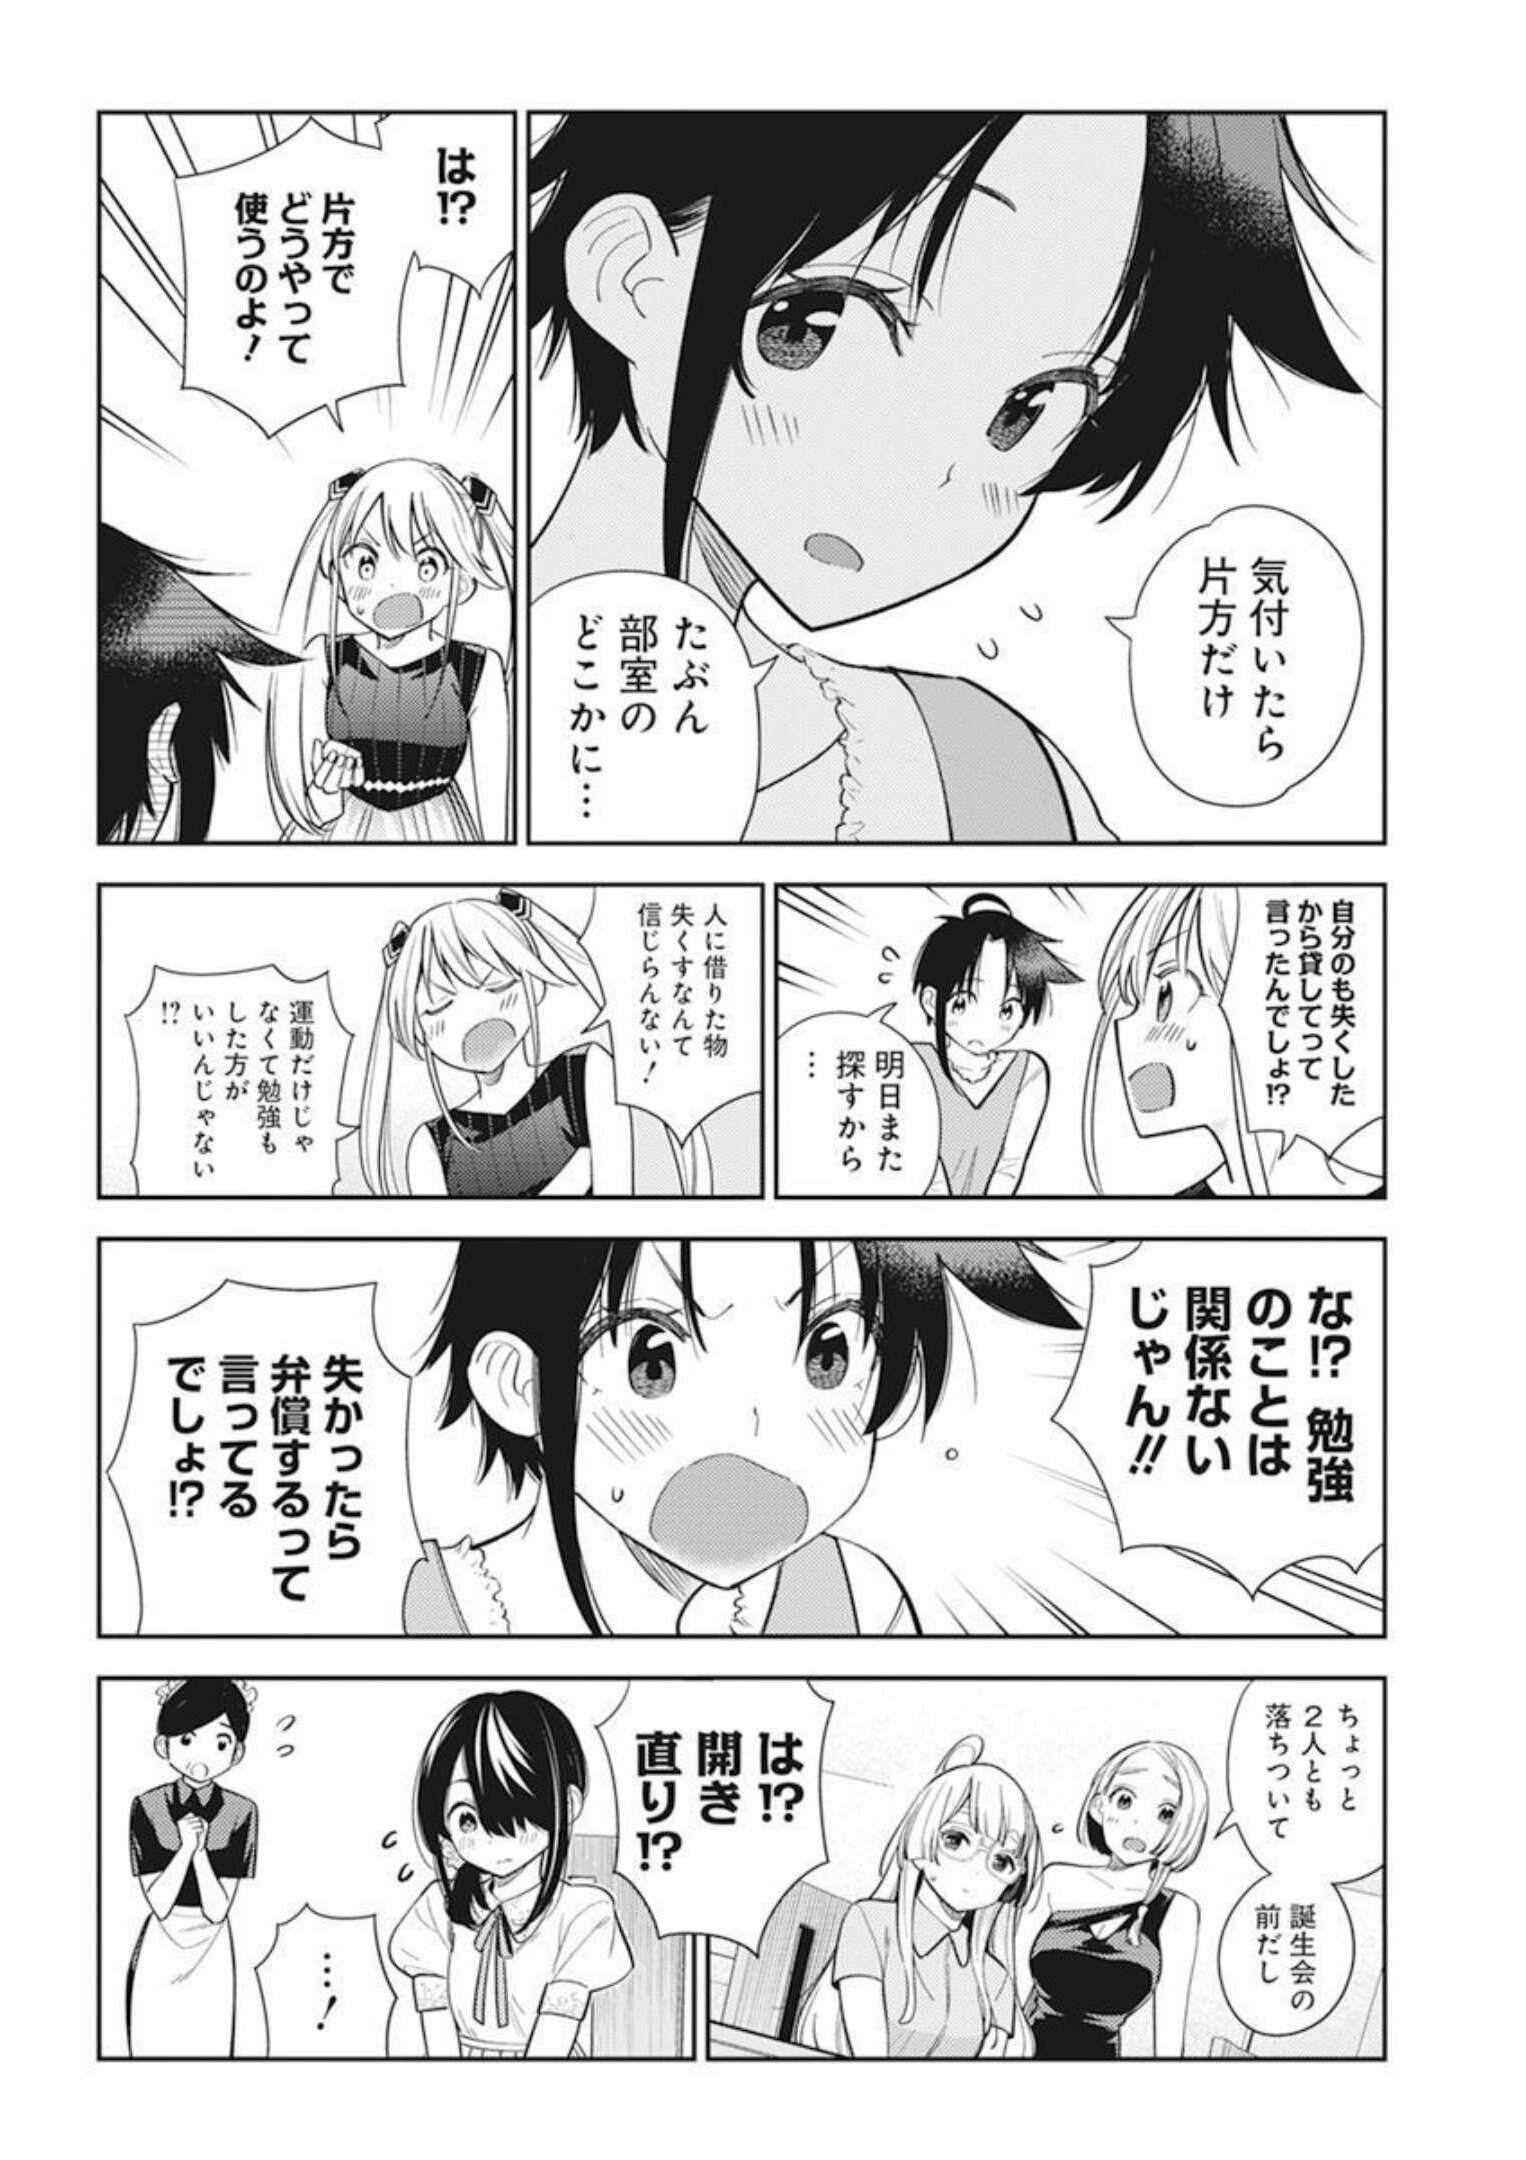 Shiunji-ke no Kodomotachi (Children of the Shiunji Family) - Chapter 01 - Page 45